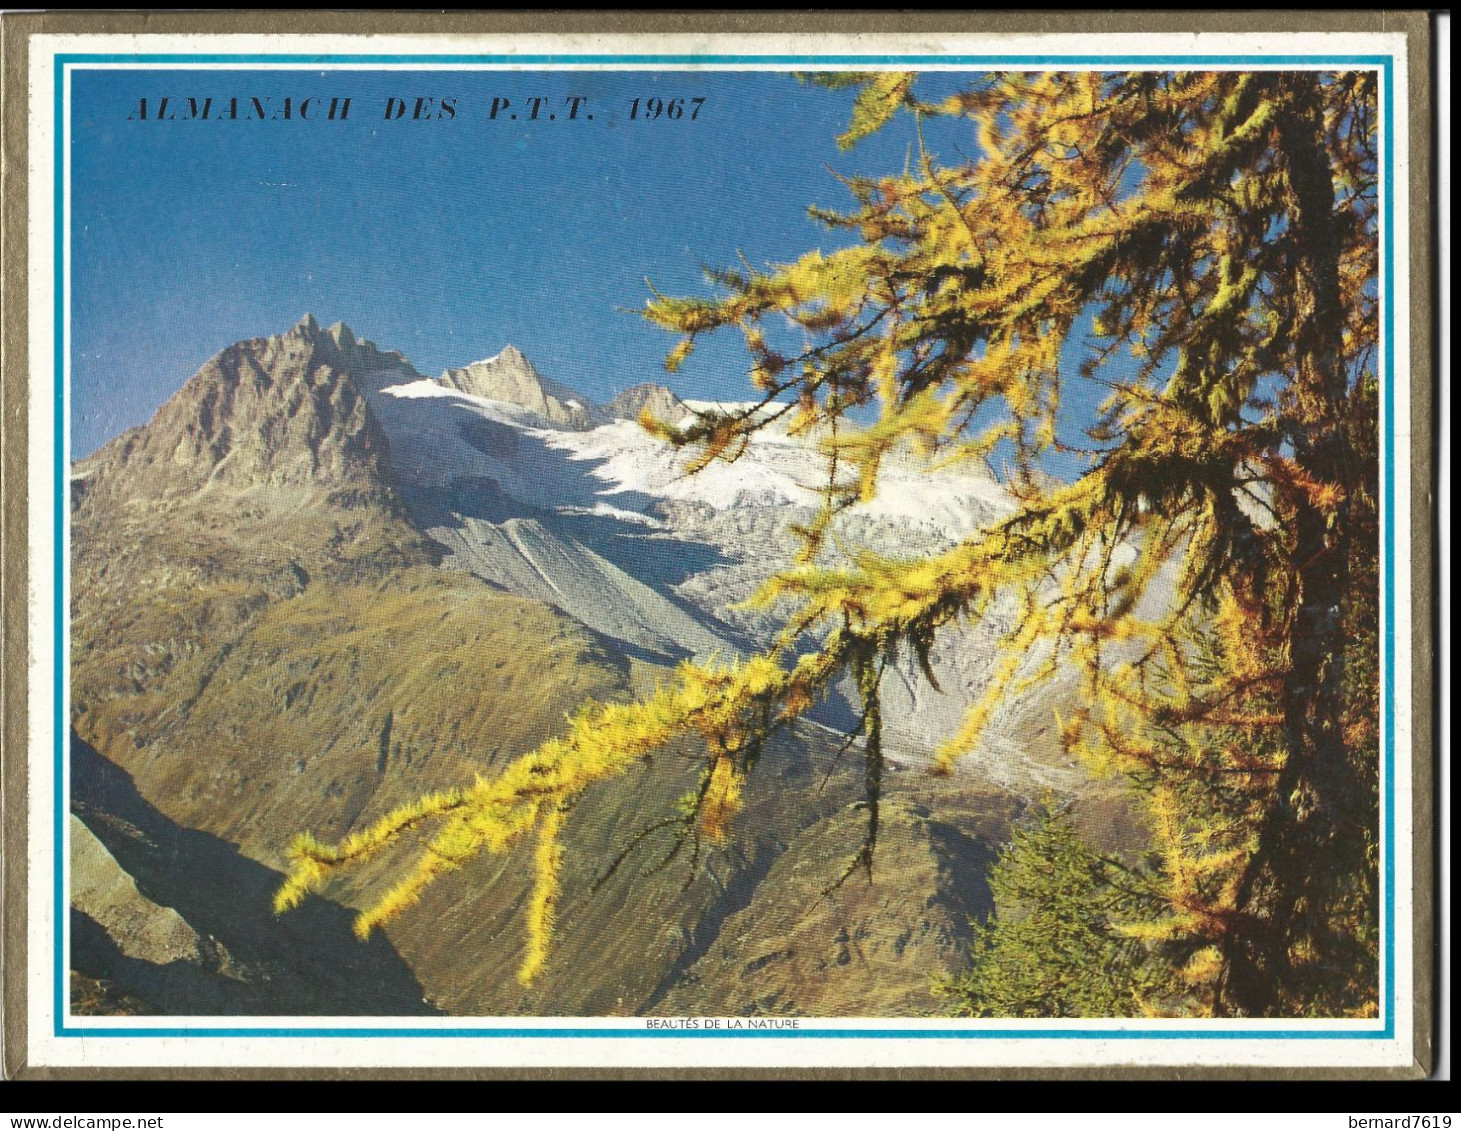 Almanach  Calendrier  P.T.T  -  La Poste -  1967 - Etretat - Beaute De La Nature - Big : 1961-70